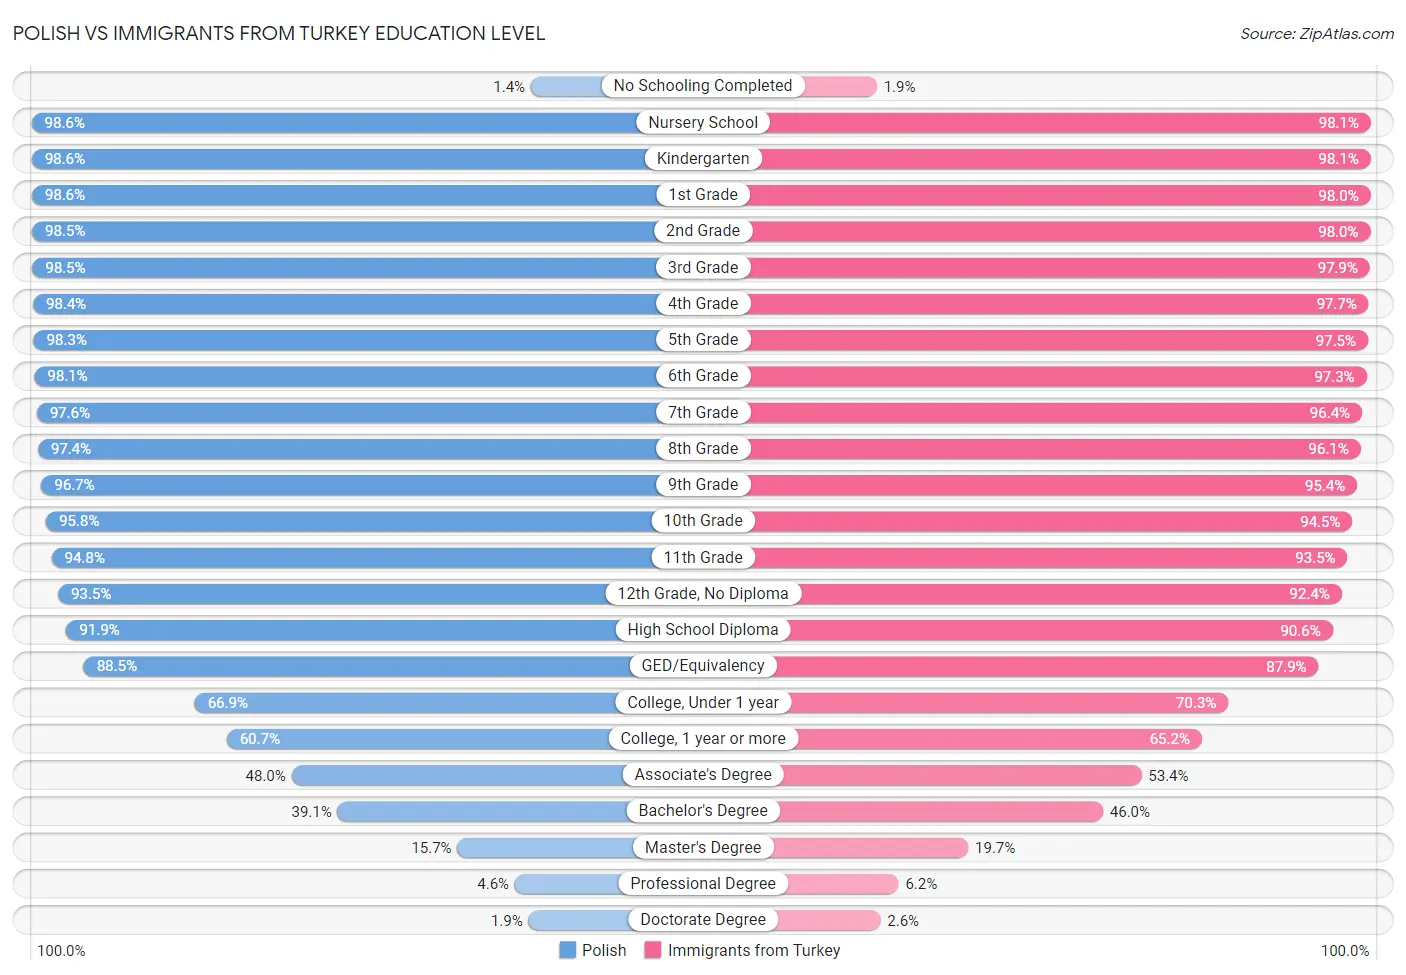 Polish vs Immigrants from Turkey Education Level